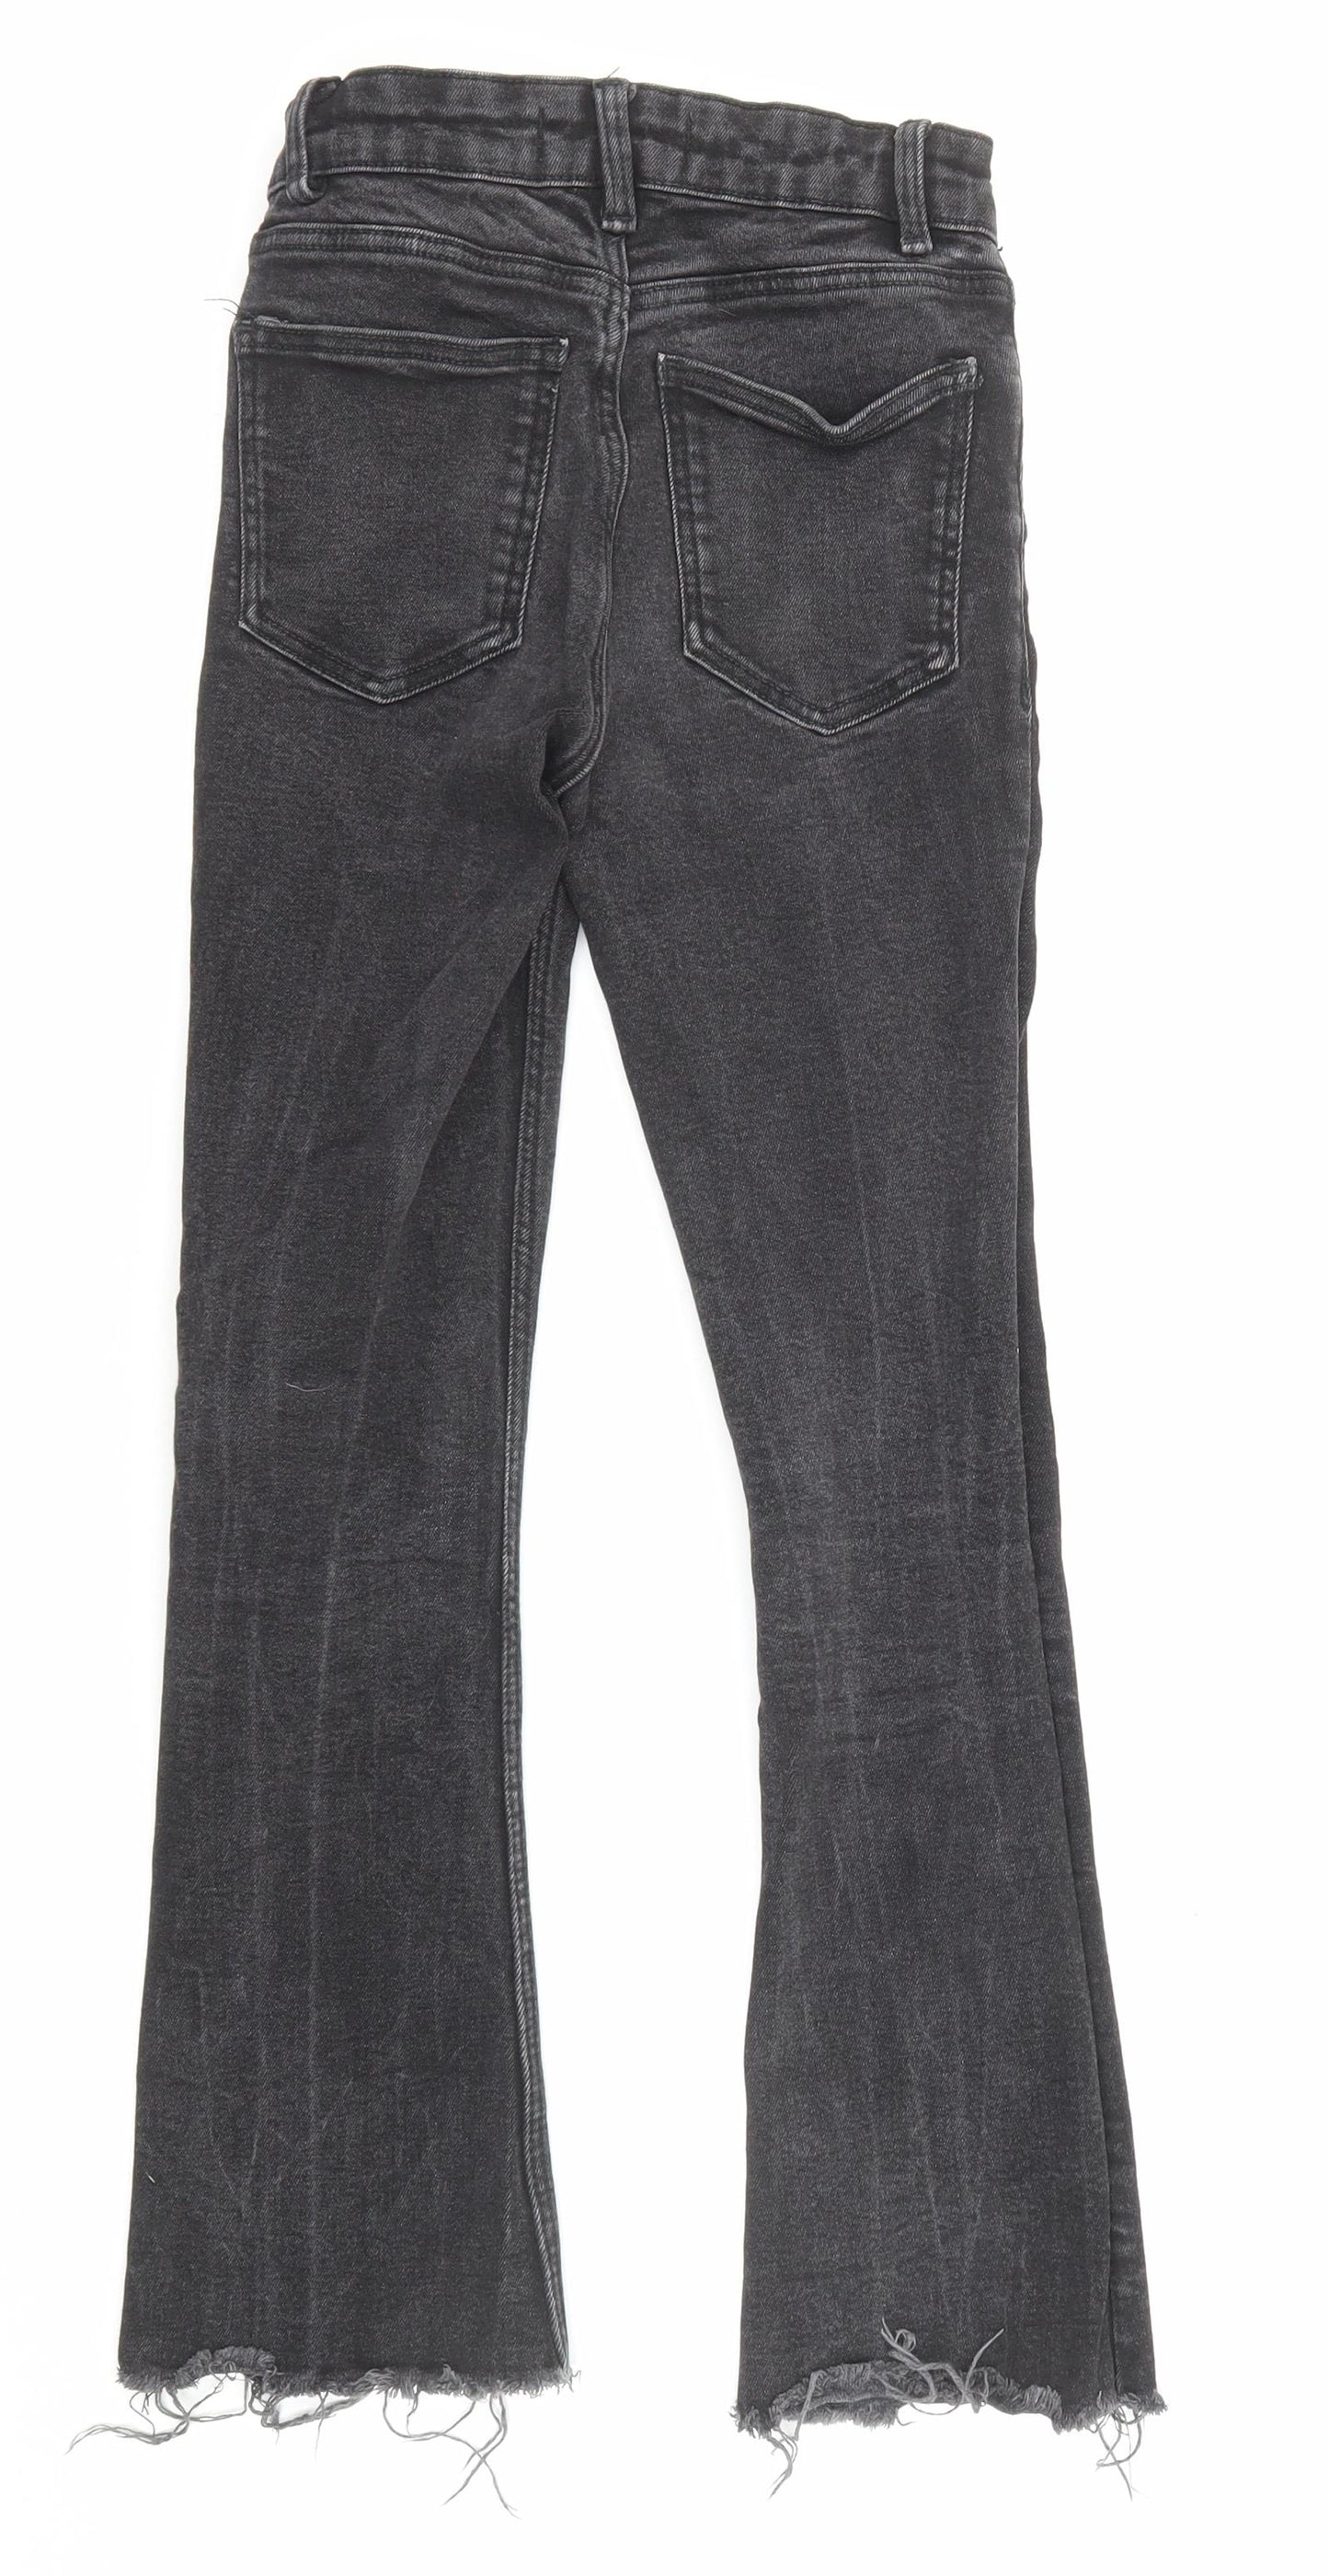 Denim & Co. Womens Black Cotton Tapered Jeans Size 4 Regular Zip - Waist 21 inches